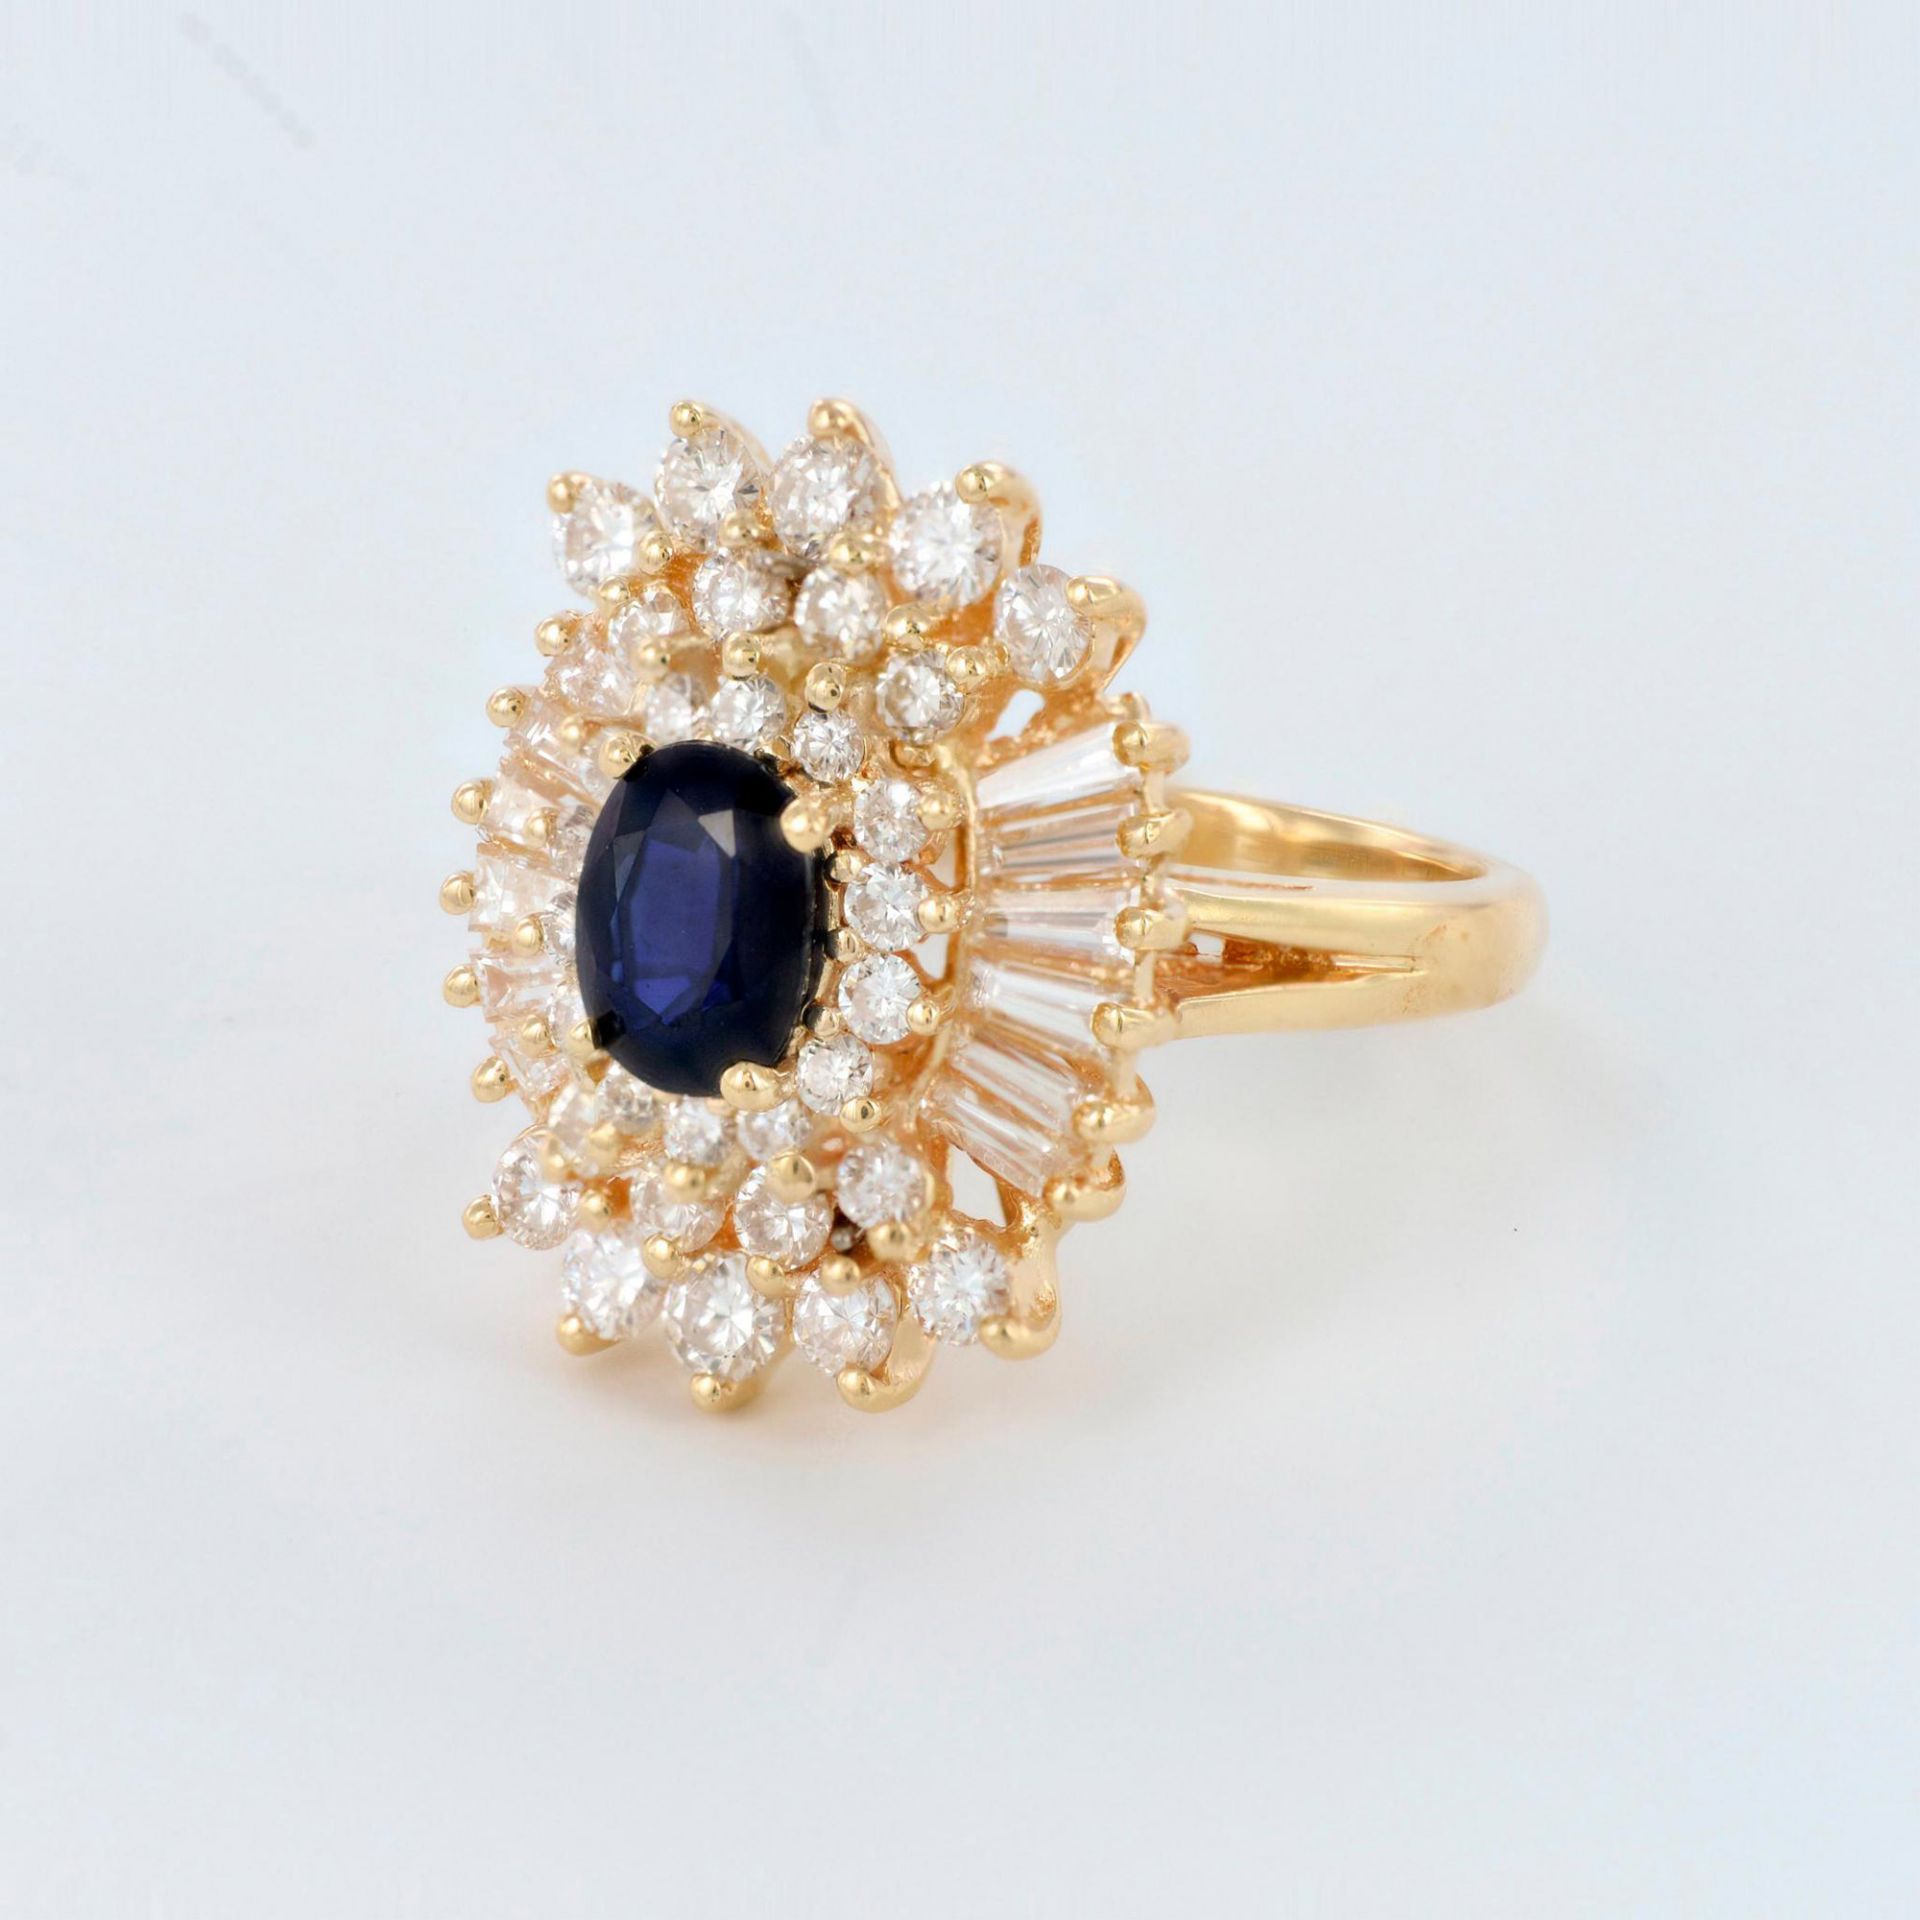 Harold Freeman 14K Yellow Gold, Sapphire, and Diamond Ring